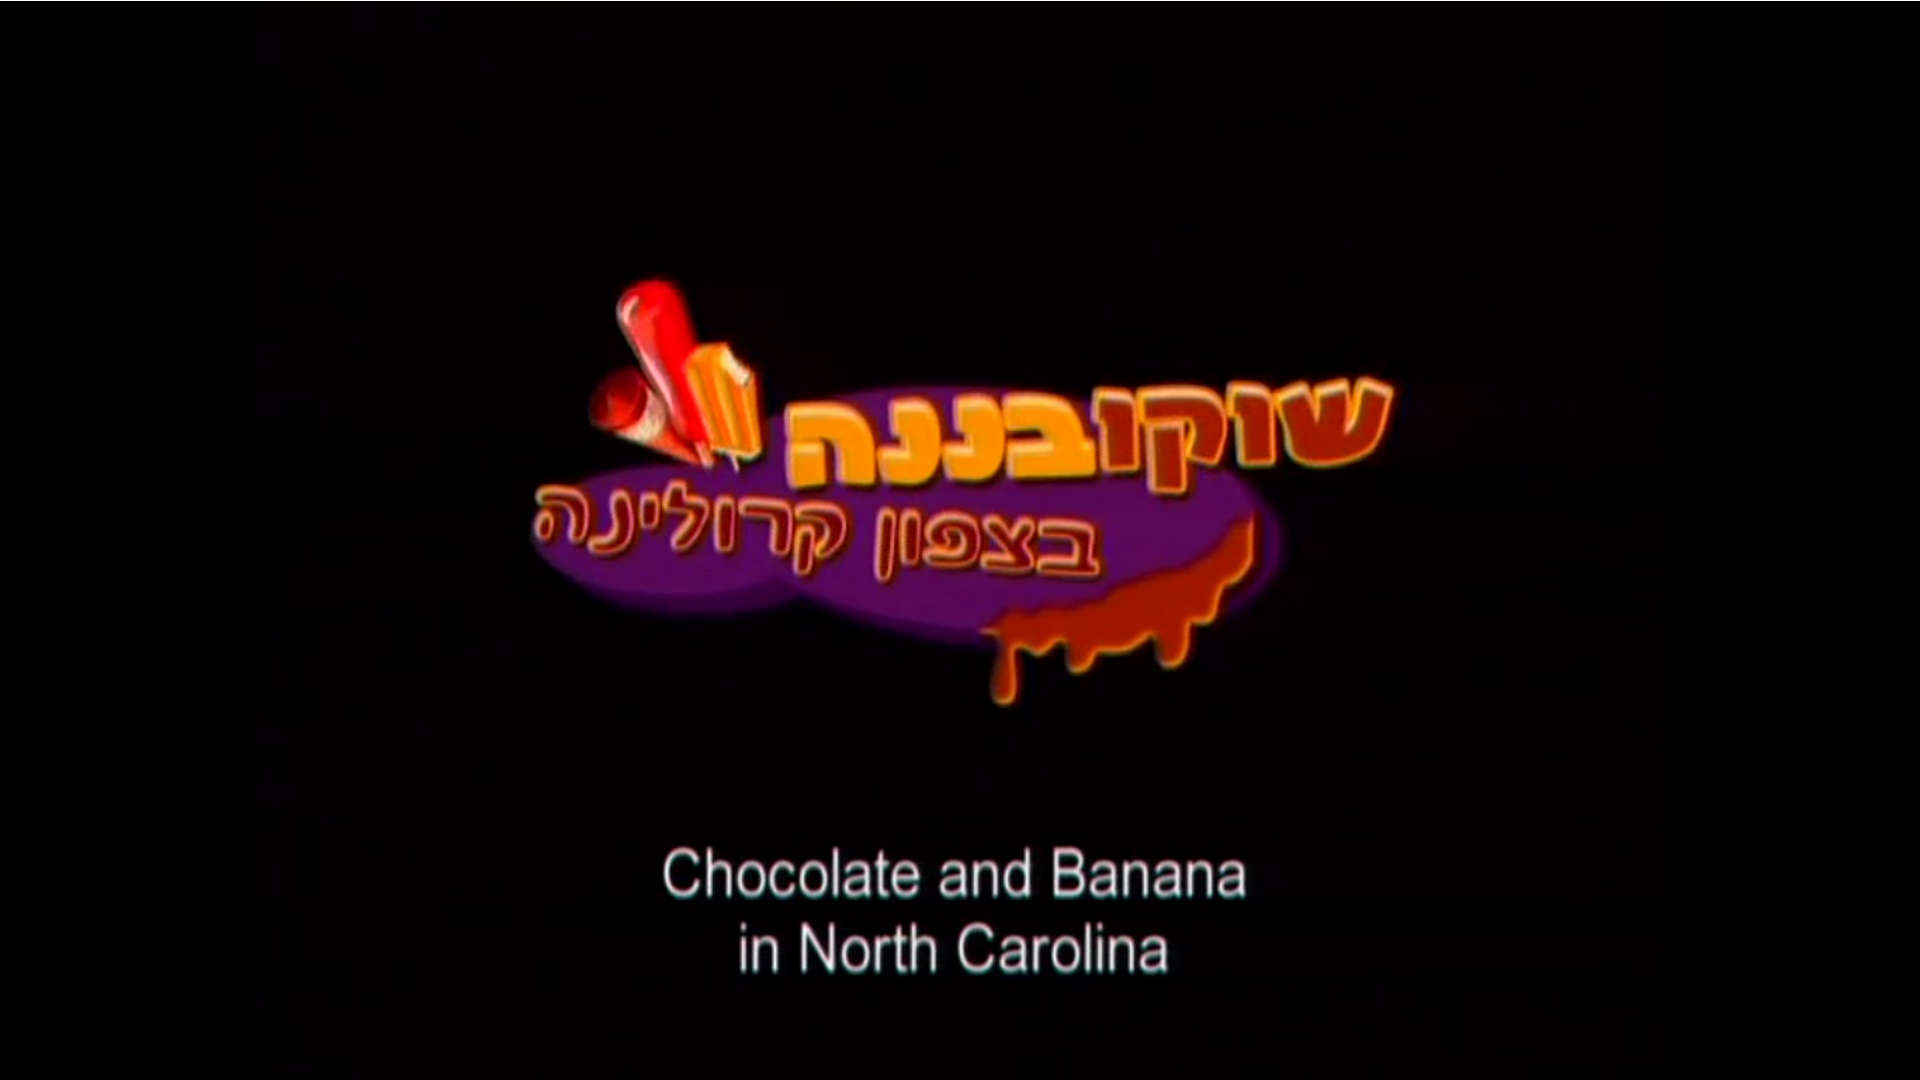 Watch Full Movie - שוקו בננה בצפון קרולינה